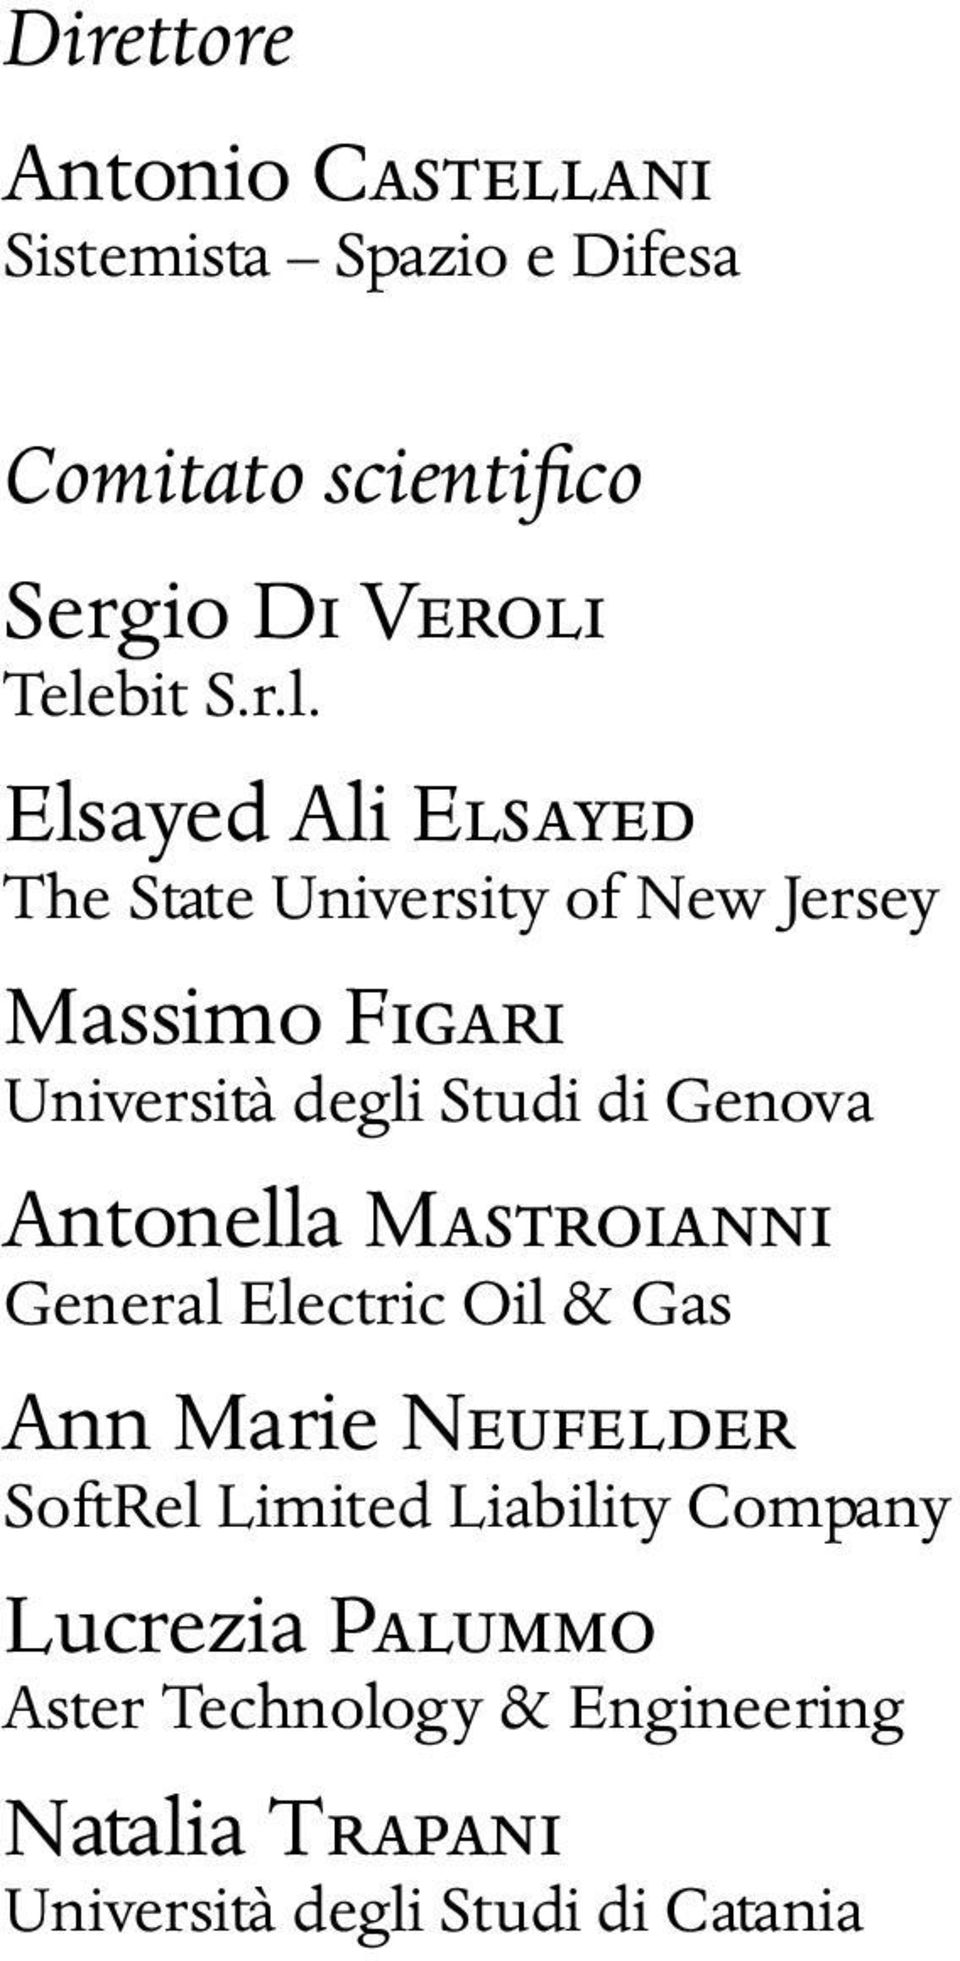 Elsayed Ali ELSAYED The State University of New Jersey Massimo FIGARI Università degli Studi di Genova